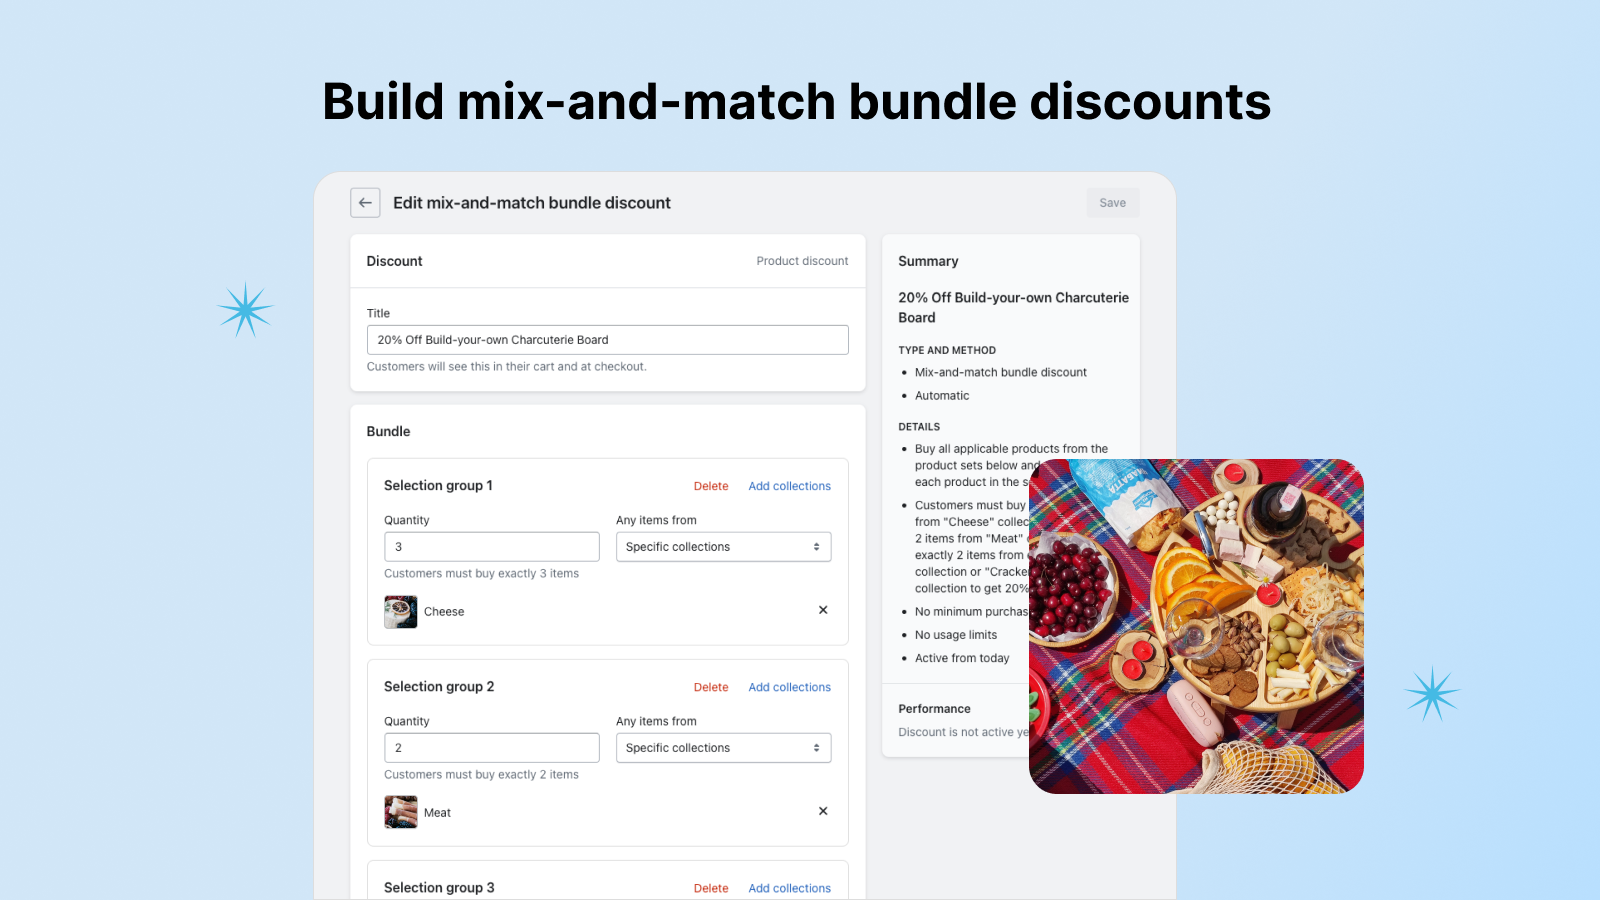 Build mix-and-match bundle discounts